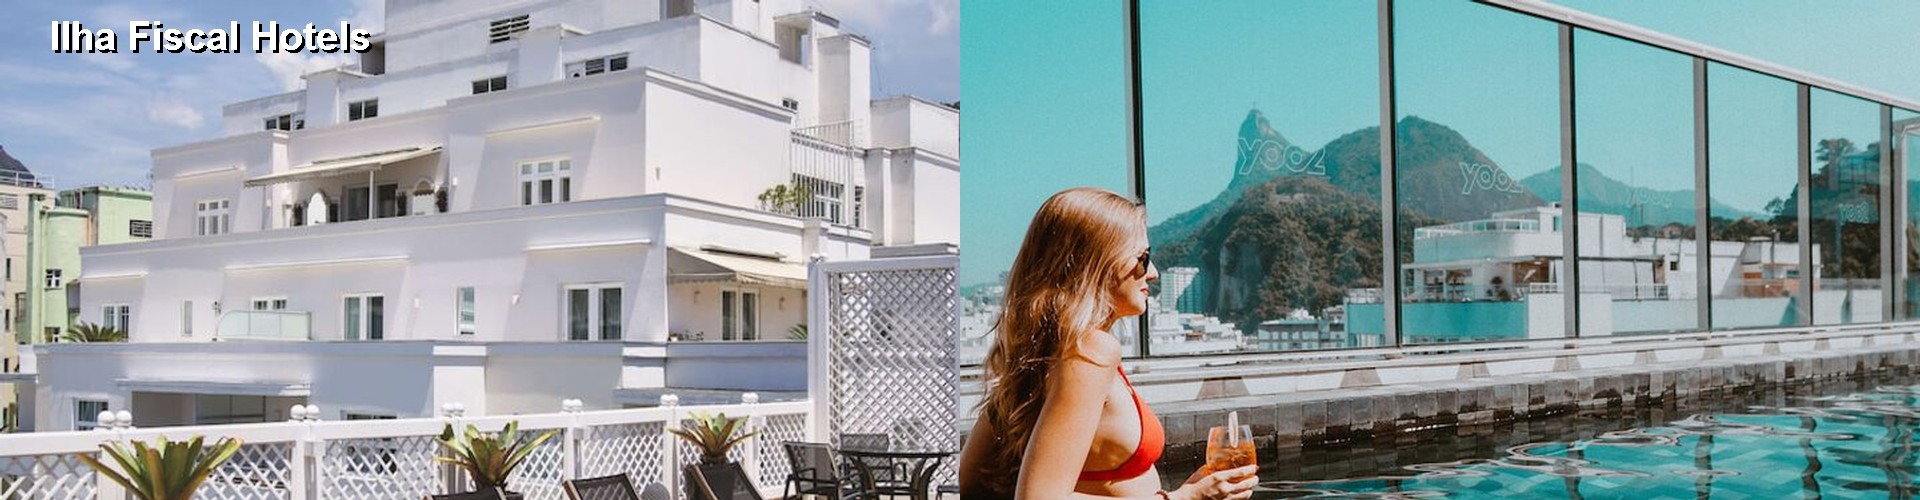 5 Best Hotels near Ilha Fiscal